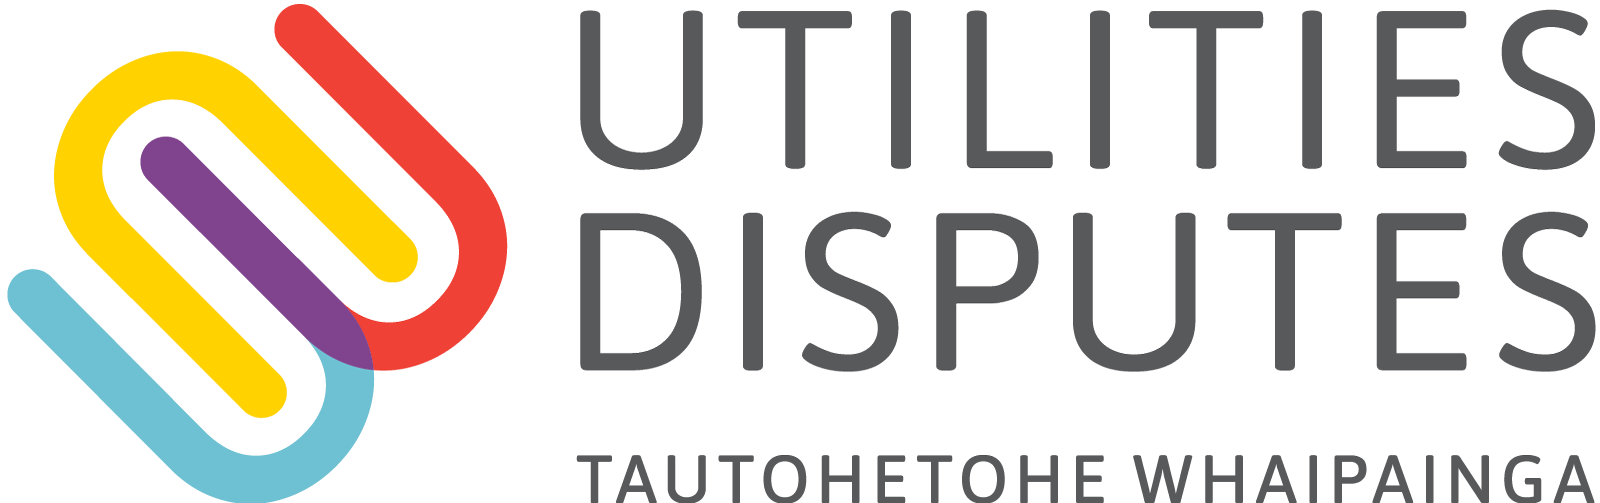 utilitiesdisputes logo v2